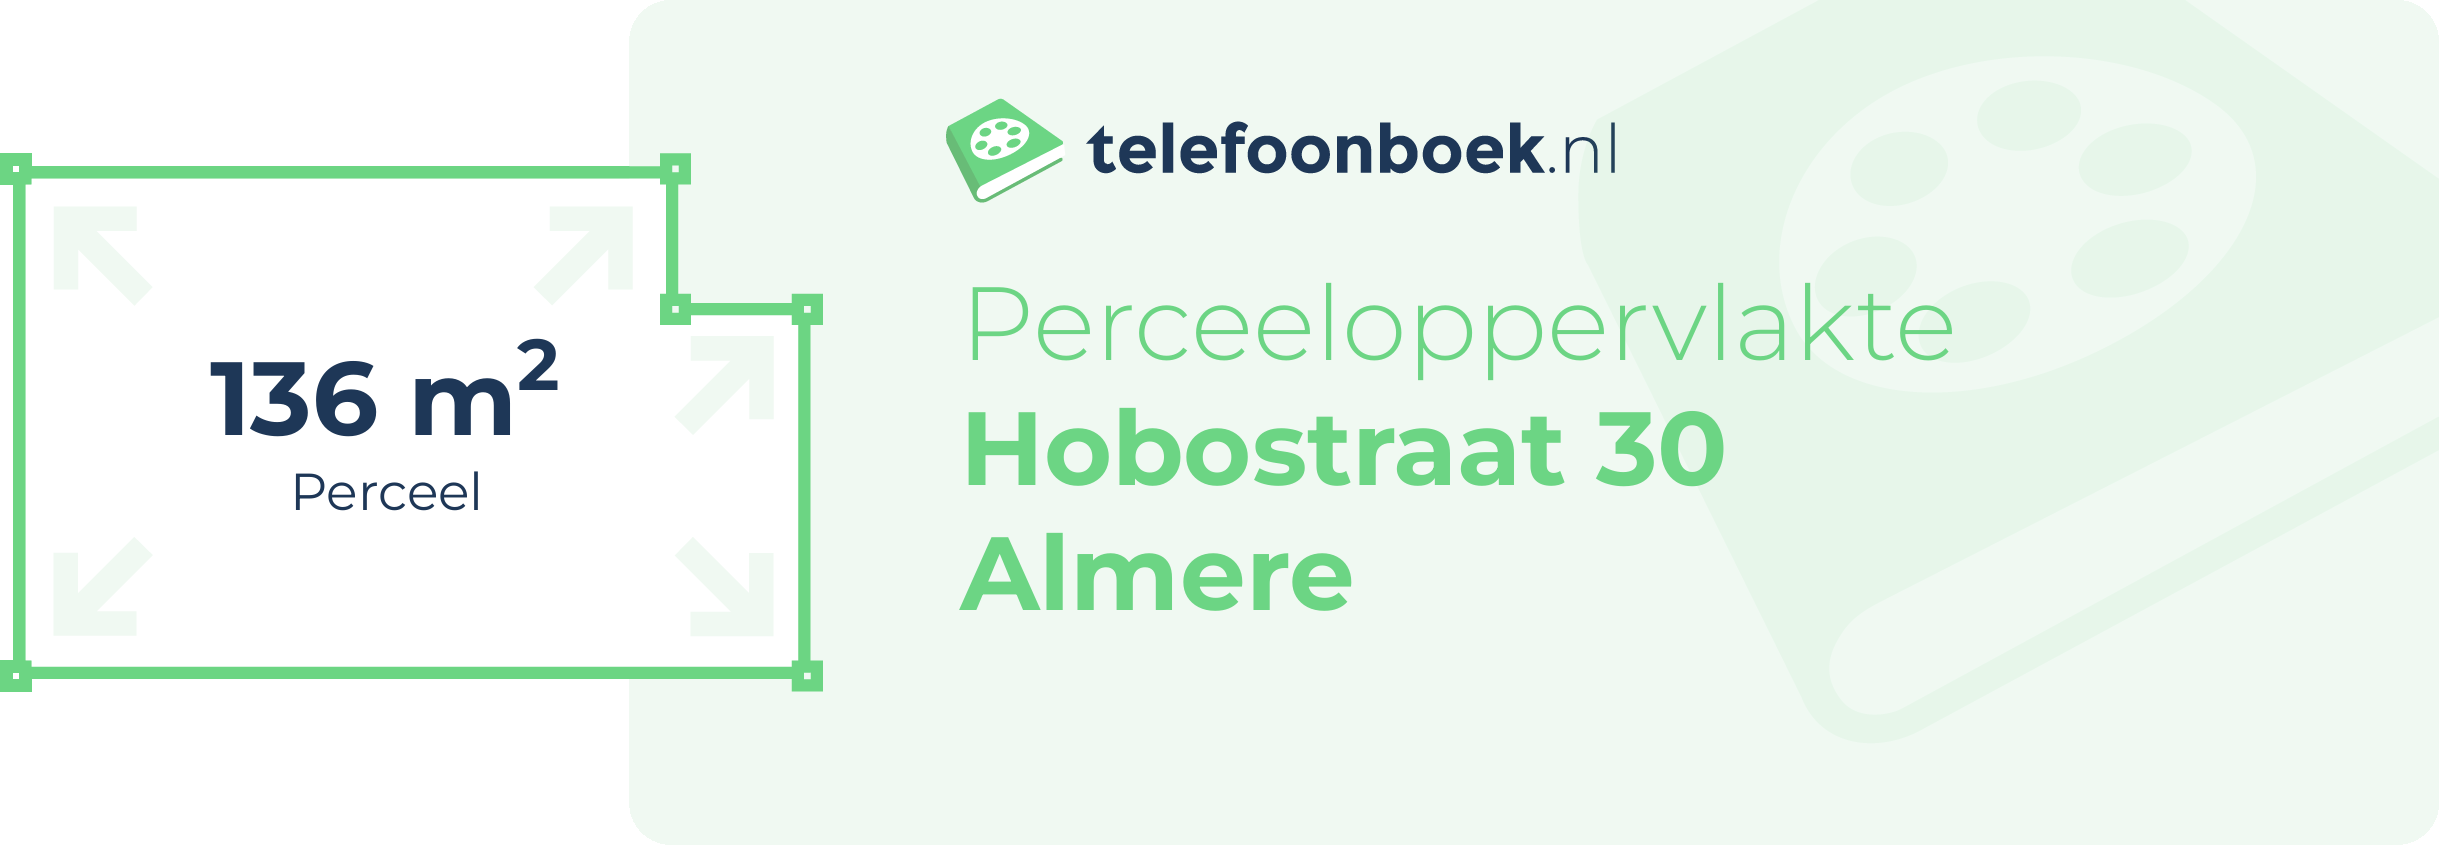 Perceeloppervlakte Hobostraat 30 Almere